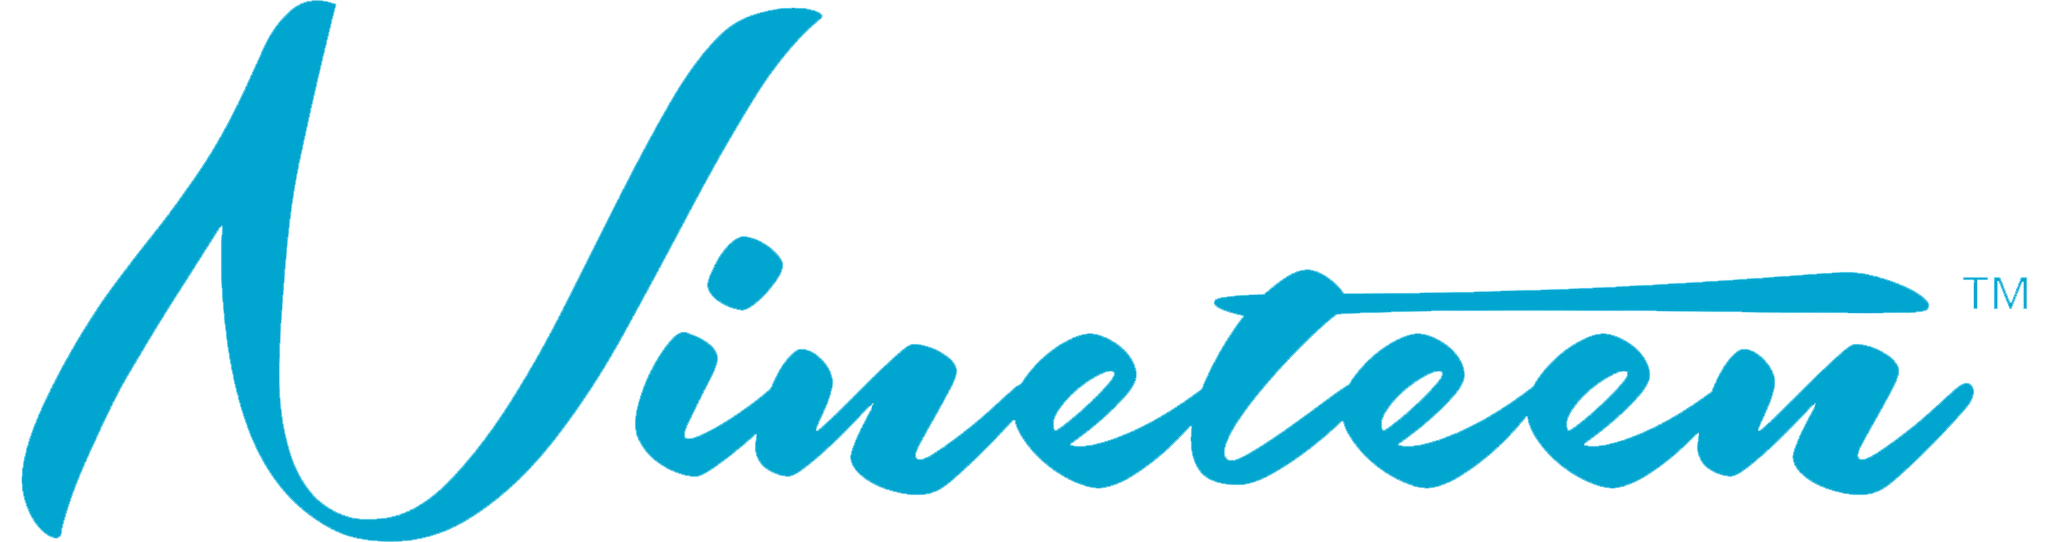 Nineteen Events logo